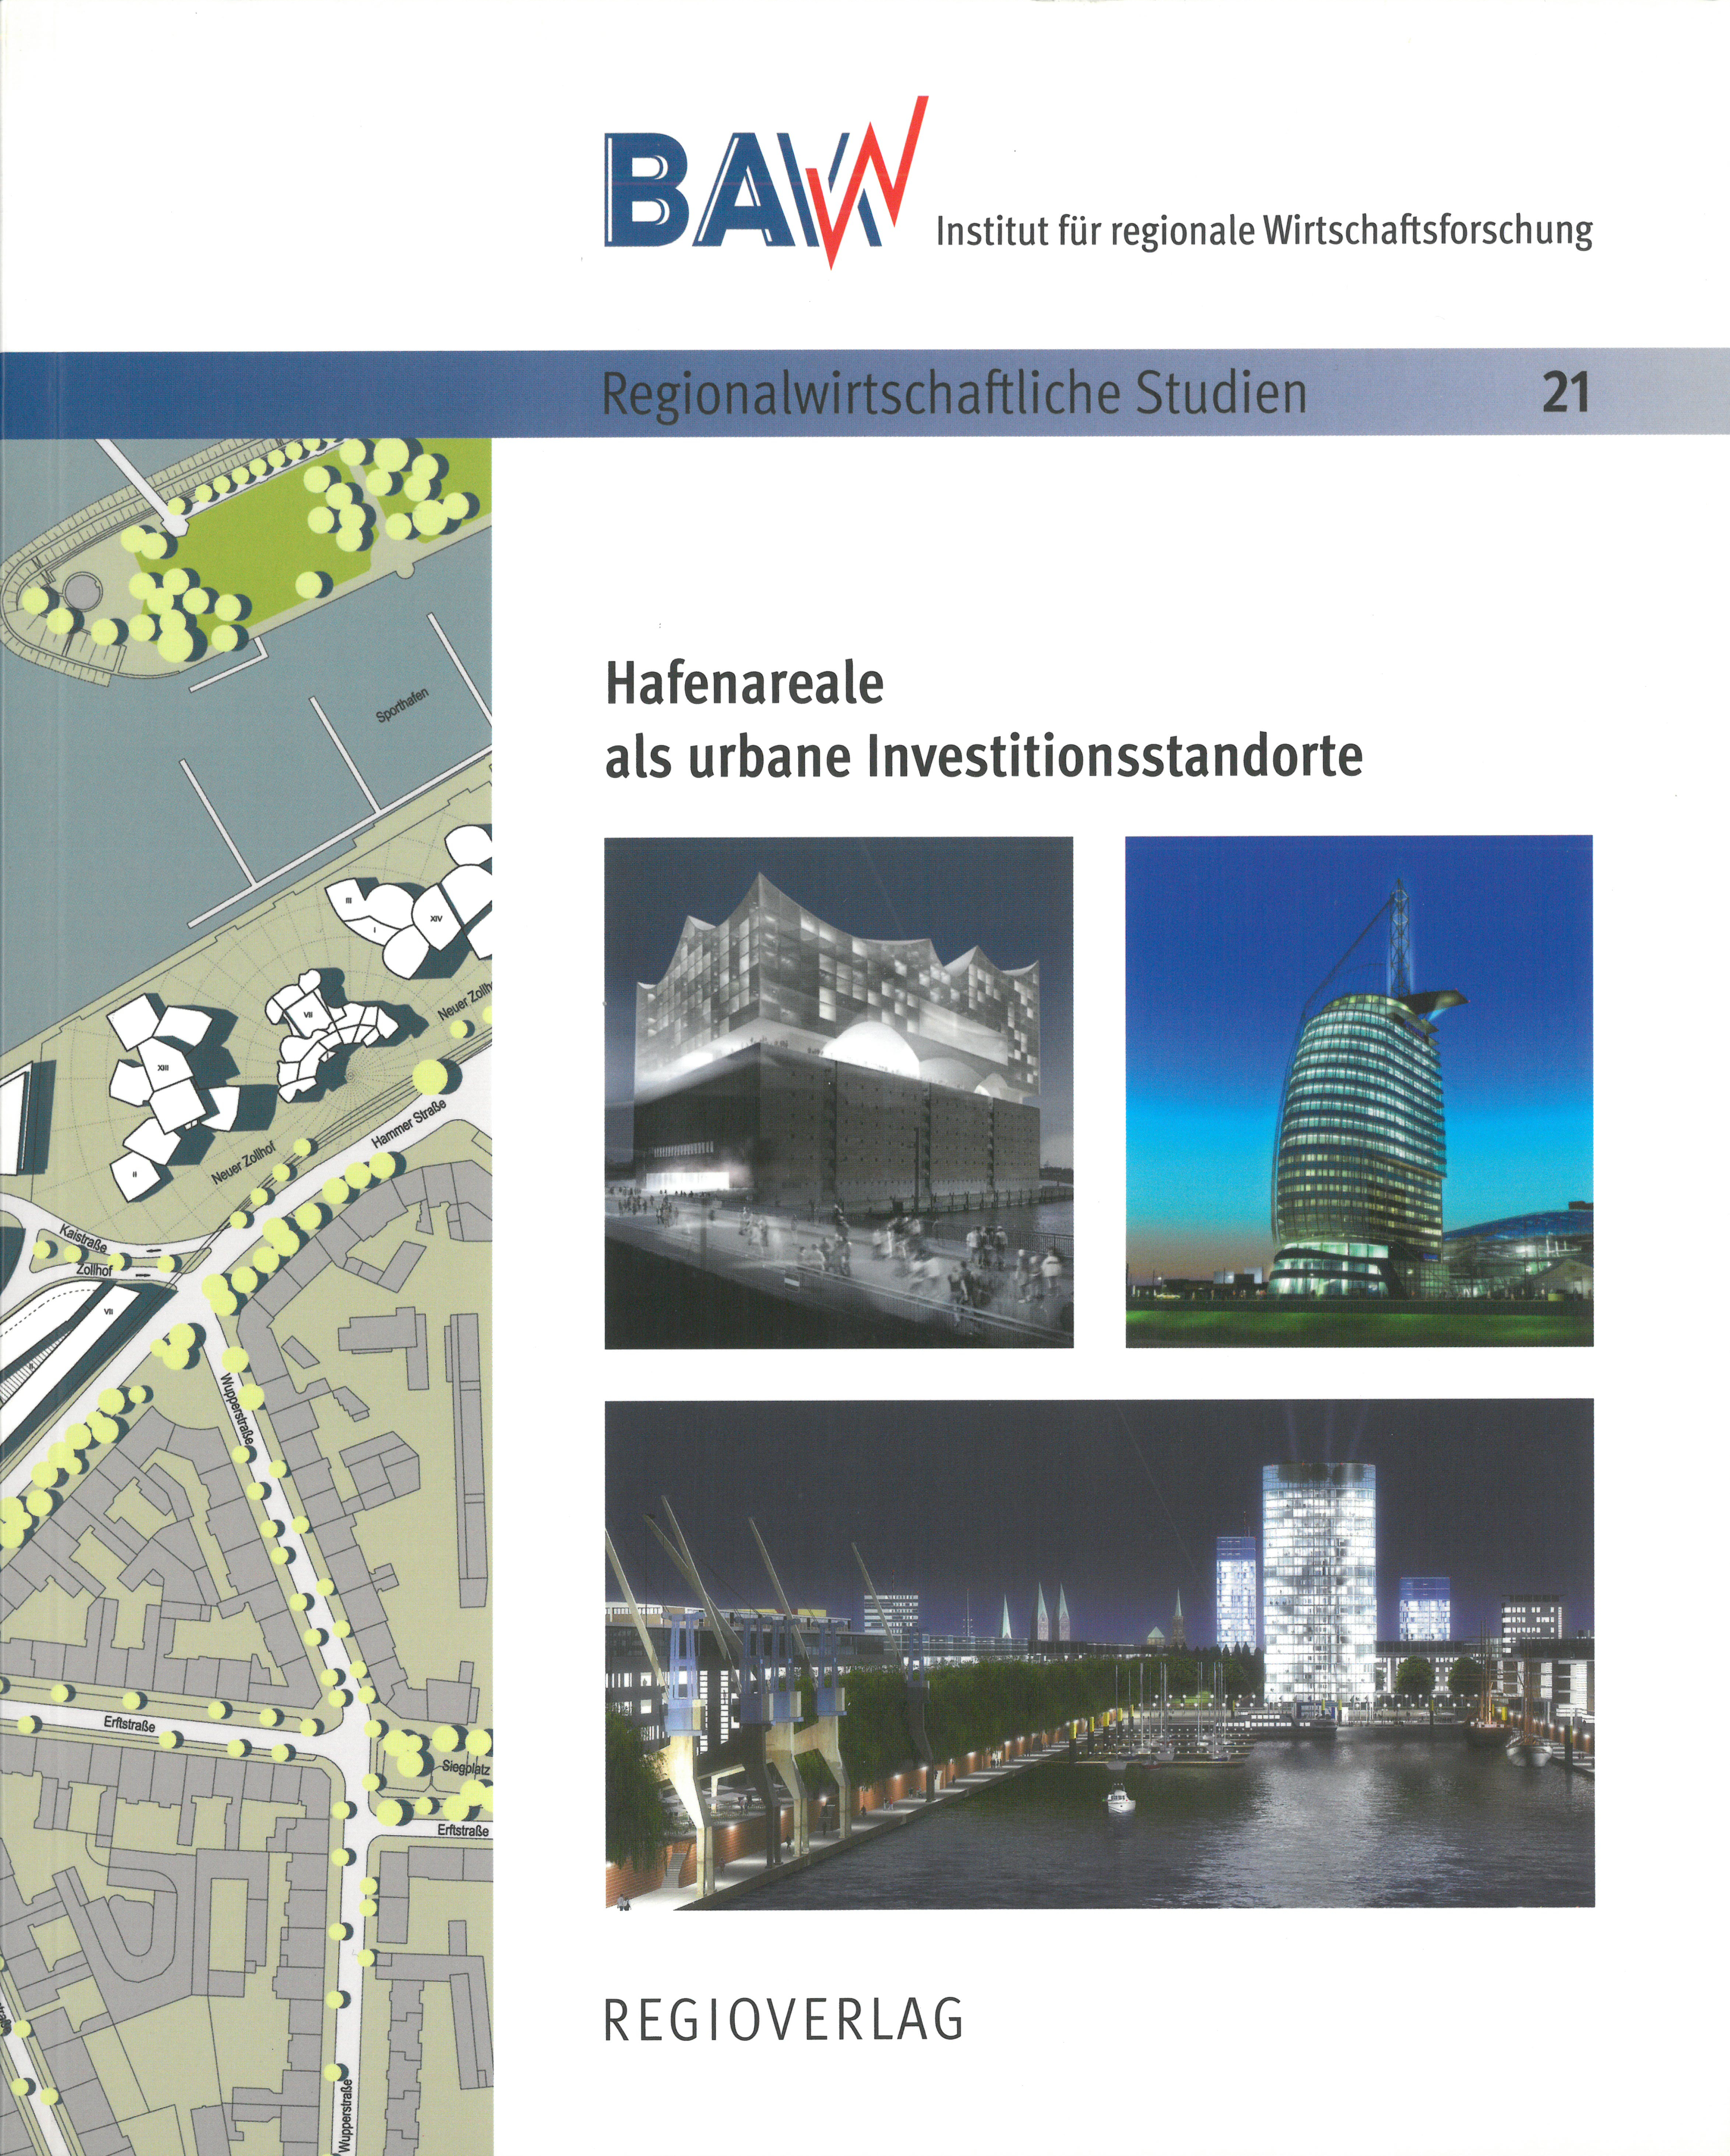 Hafenareale als urbane Investitionsstandorte